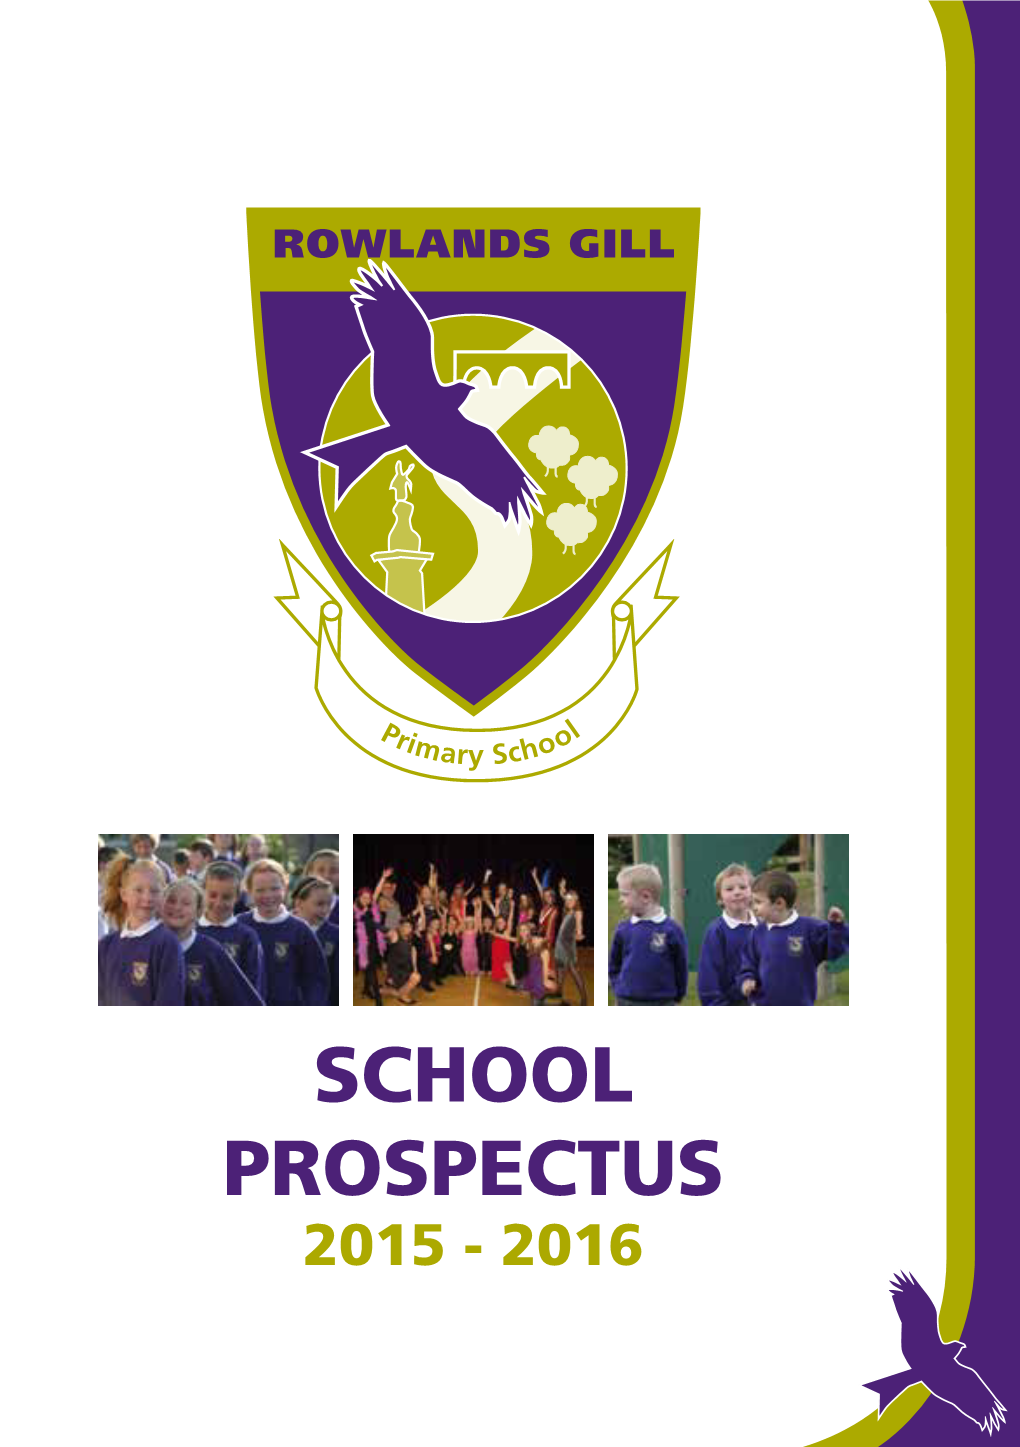 School Prospectus 2015 - 2016